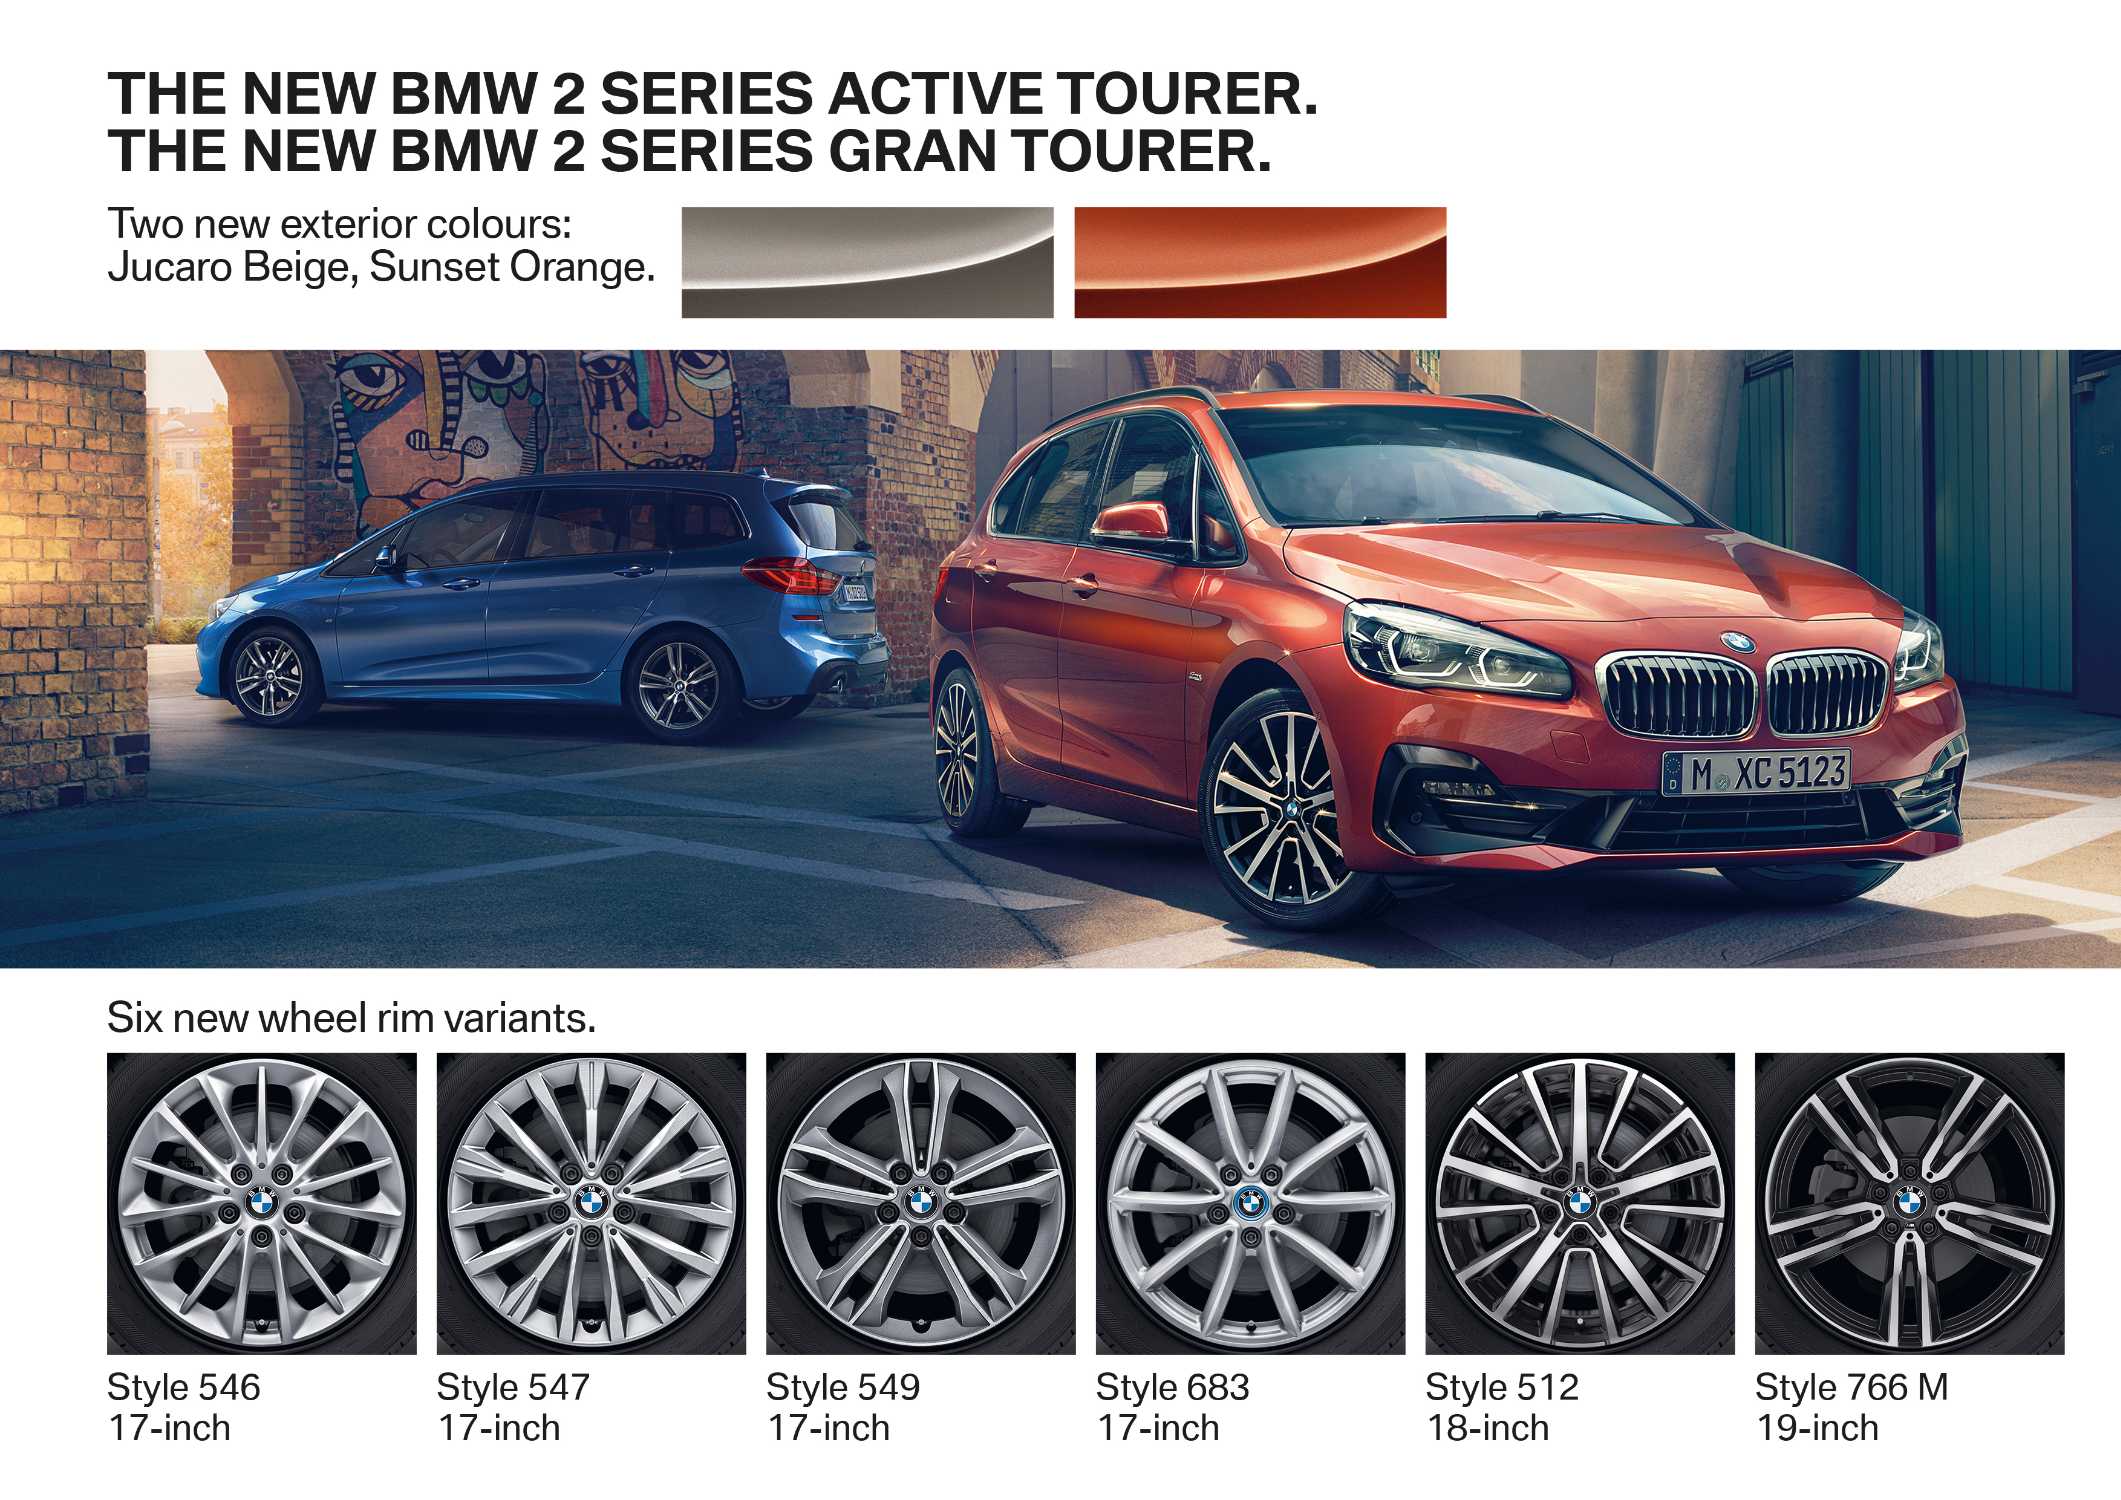 The new BMW 2 Series Active Tourer. The new BMW 2 Series Gran Tourer (01/2018).